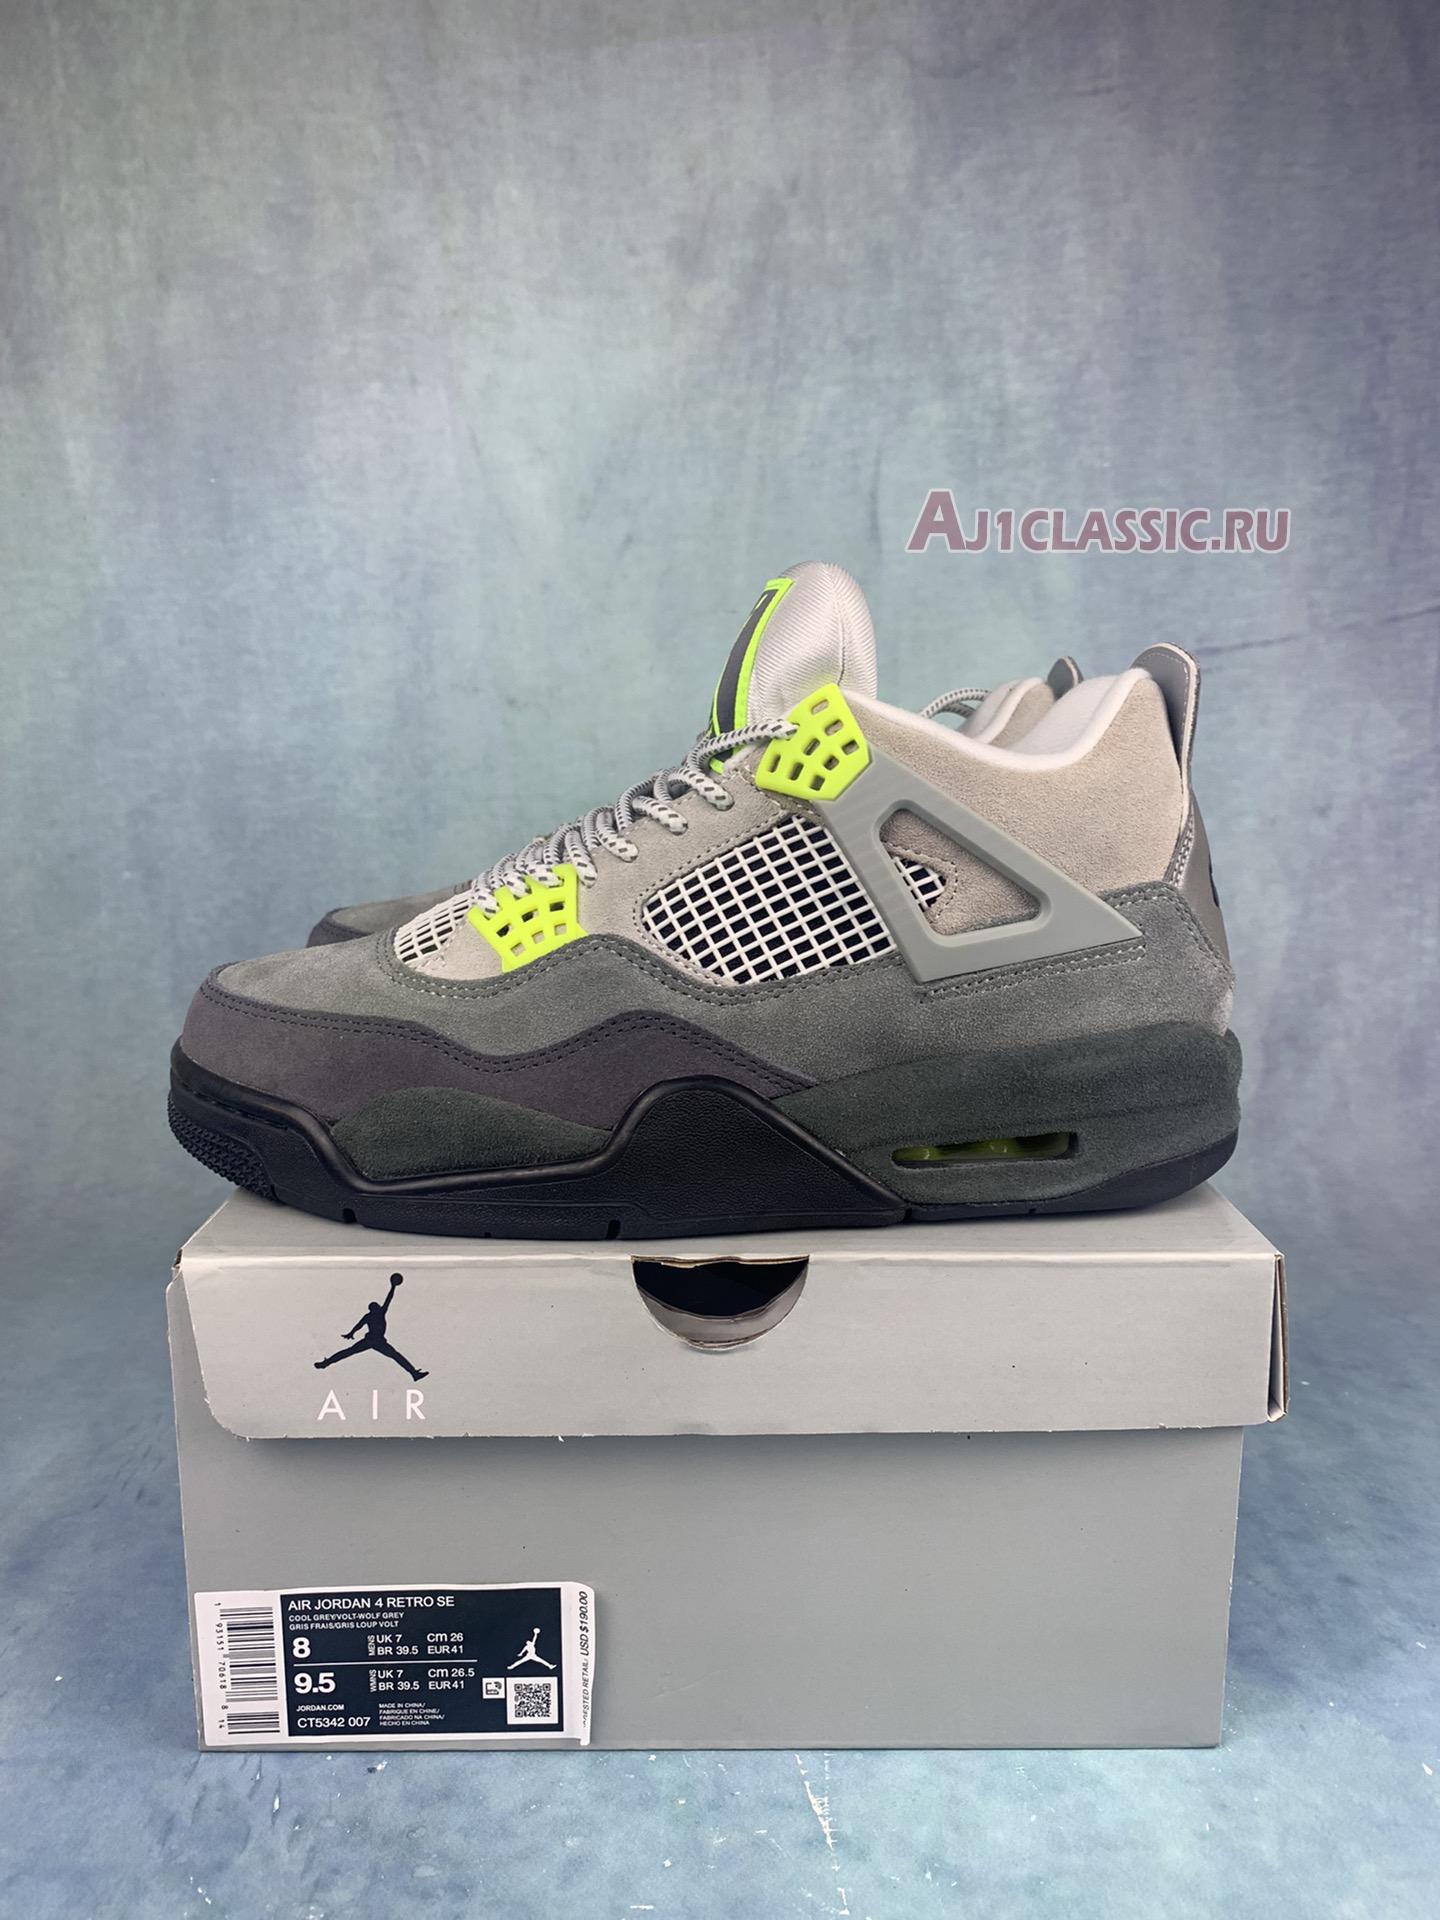 Air Jordan 4 SE Neon CT5342-007-2 Cool Grey/Volt/Wolf Grey/Anthracite Sneakers